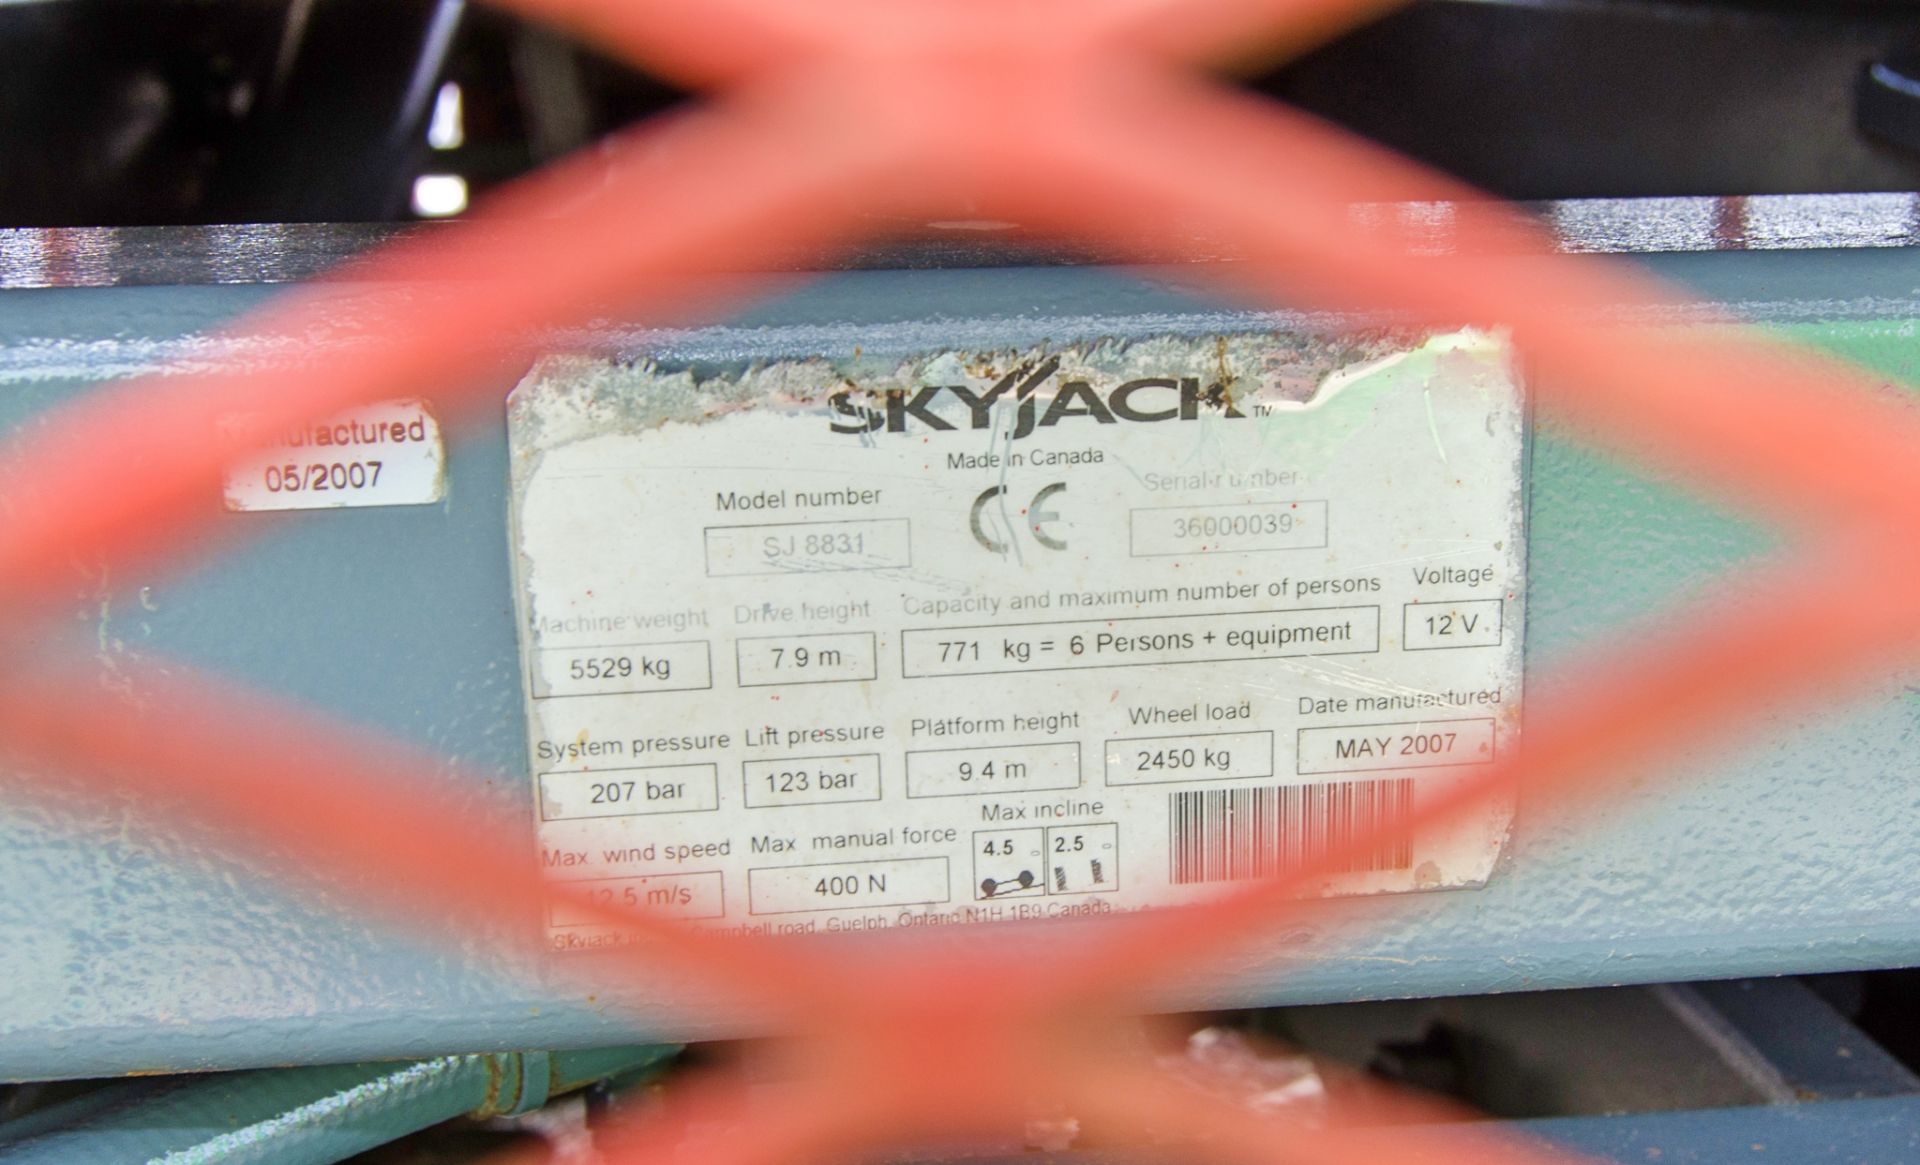 Skyjack SJ8831 diesel driven rough terrain scissor lift access platform Year: 2007 S/N: 3600039 - Image 22 of 22